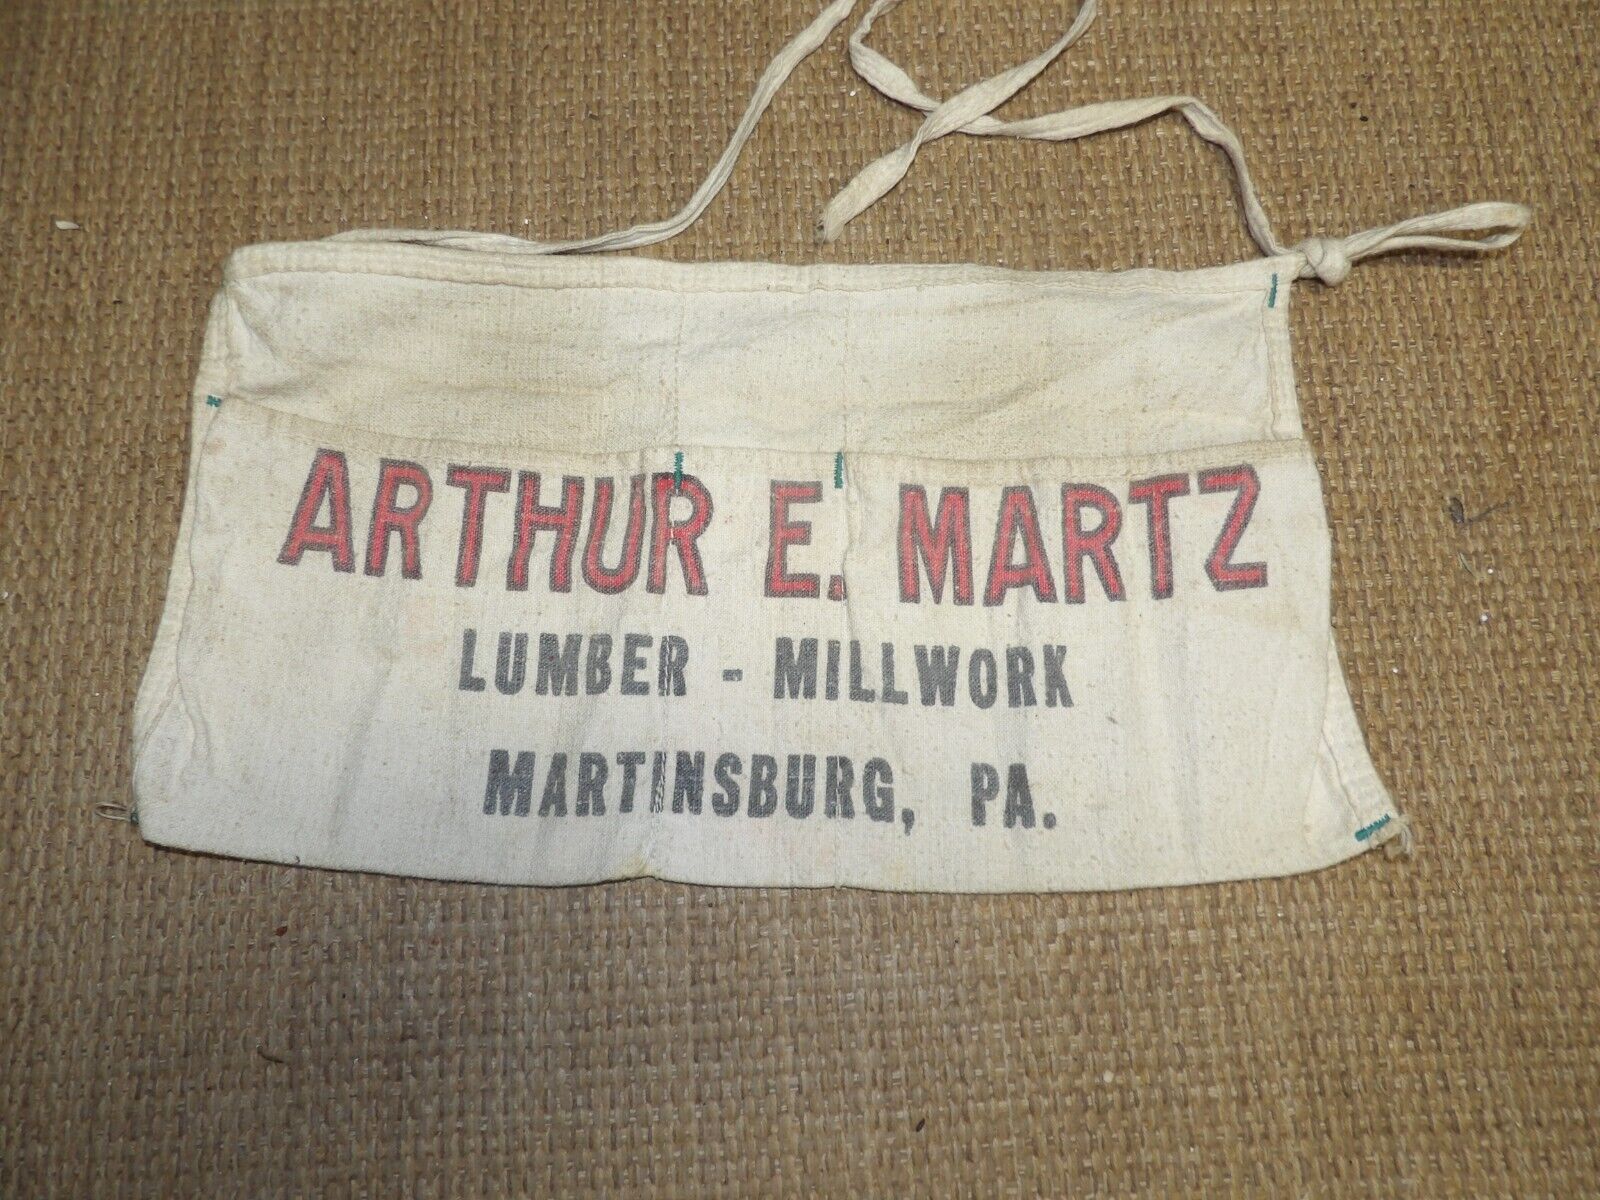 Vintage Carpenters Apron Arthur E. Martz Martinsburg PA